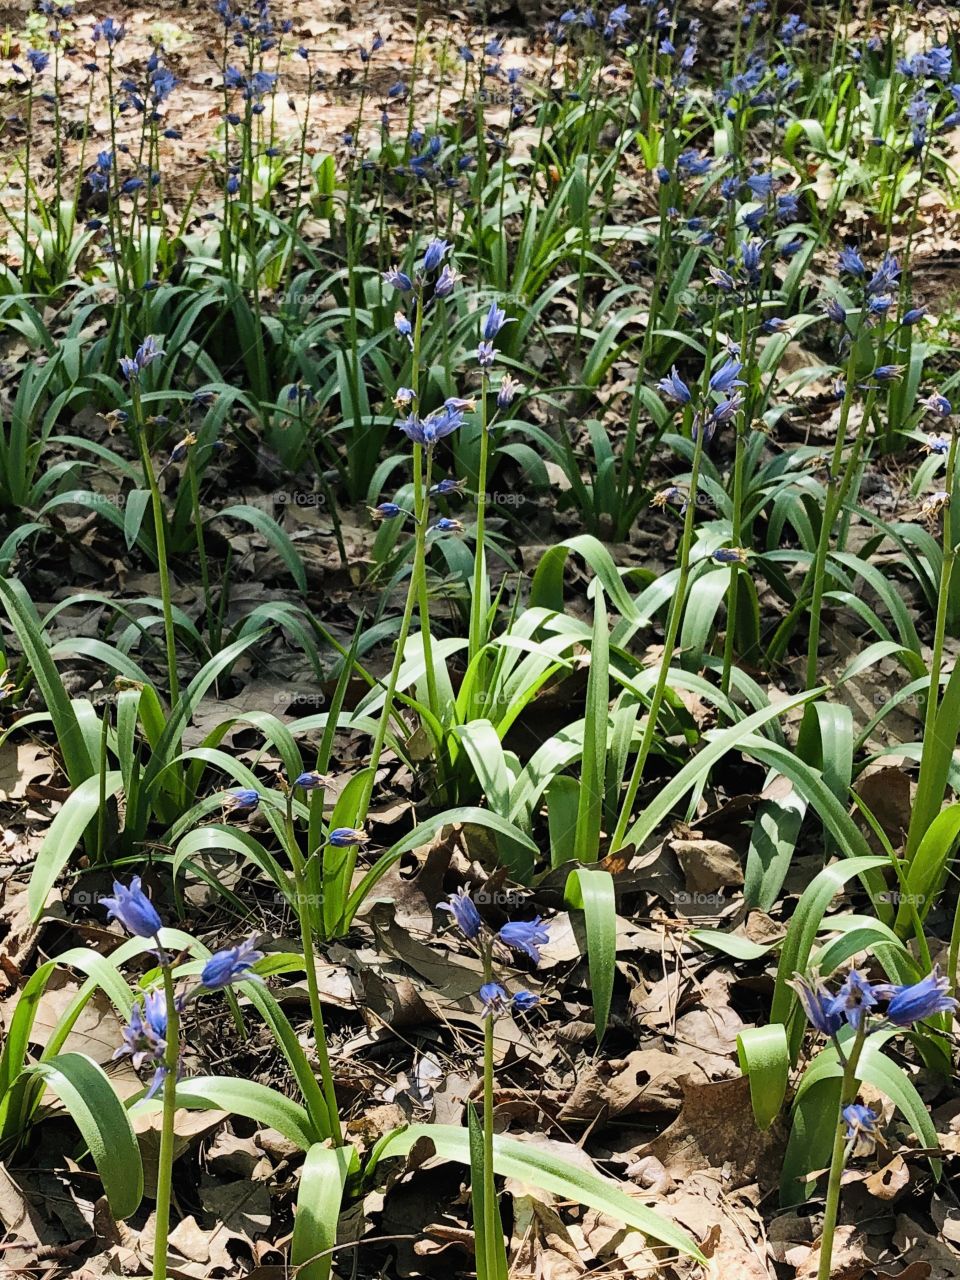 Blue Blooms